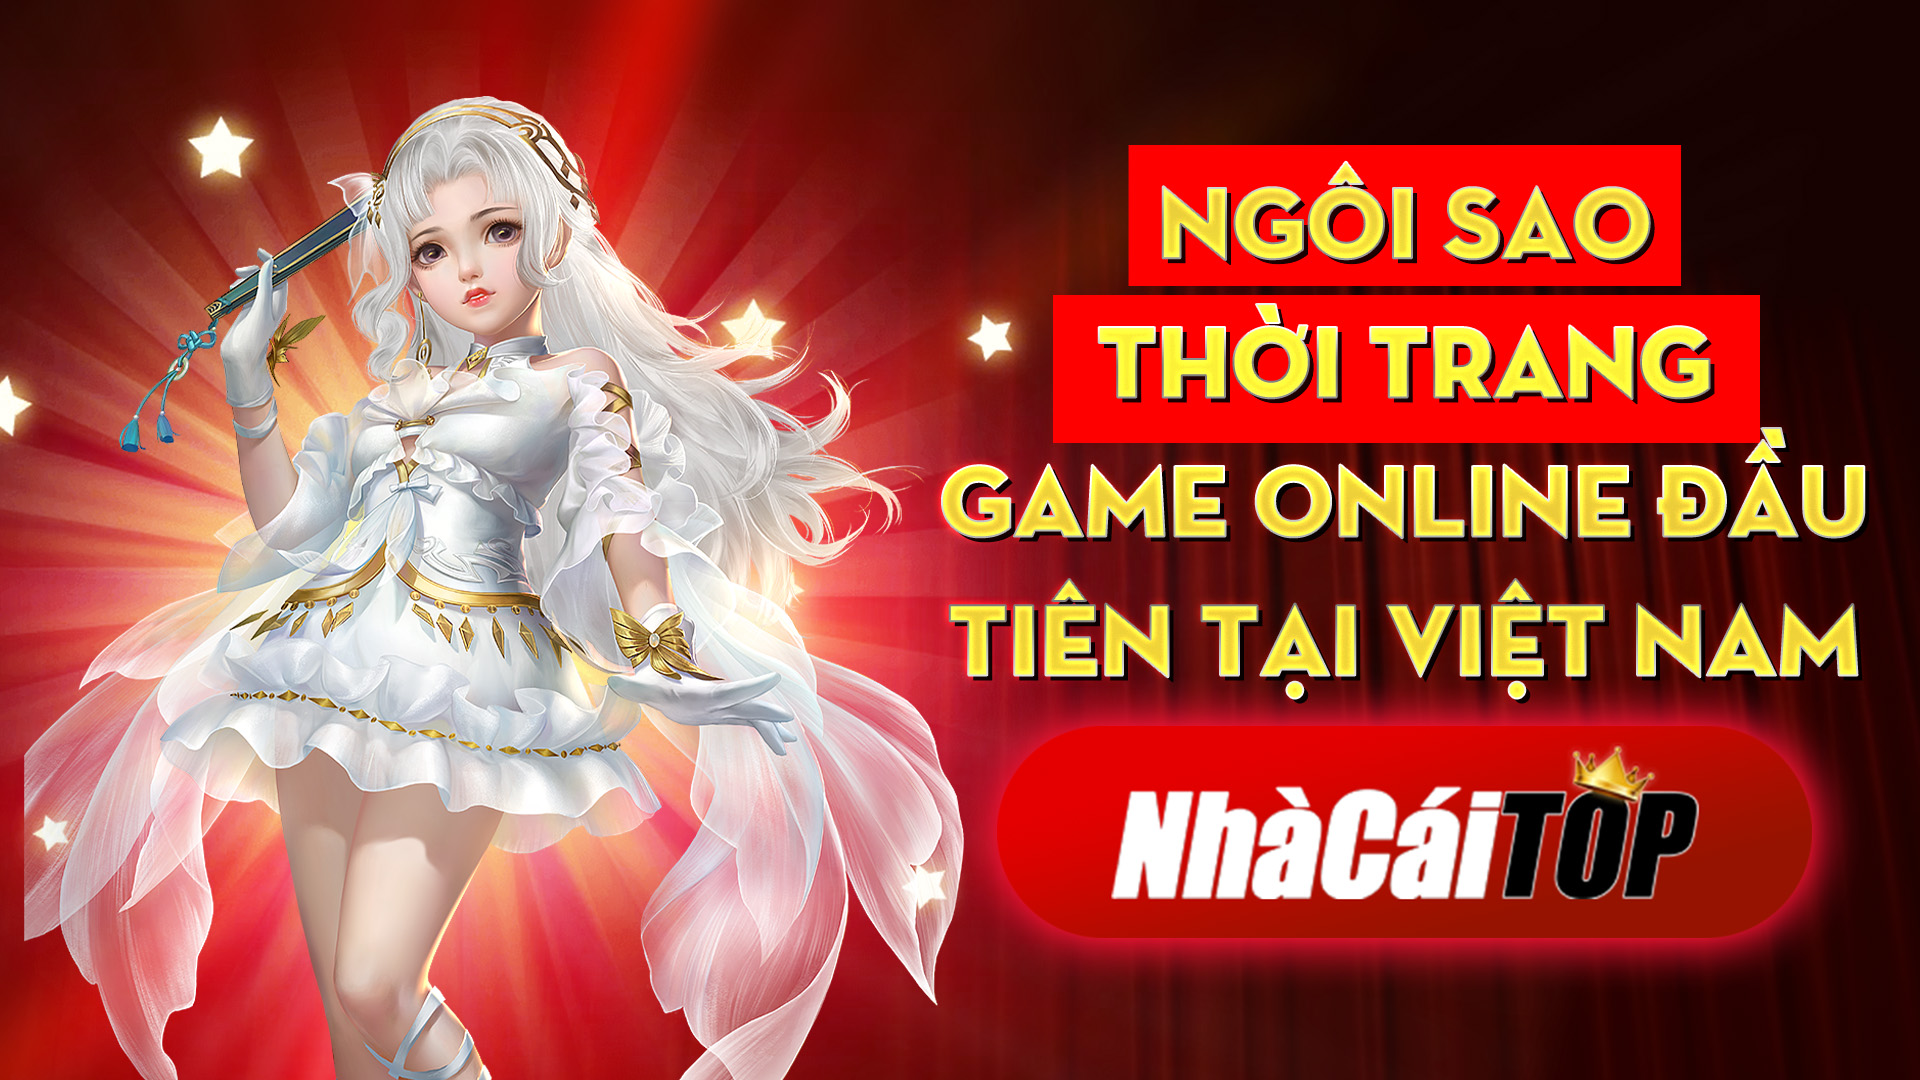 337 Ngoi Sao Thoi Trang – Game Online Djau Tien Tai Viet Nam